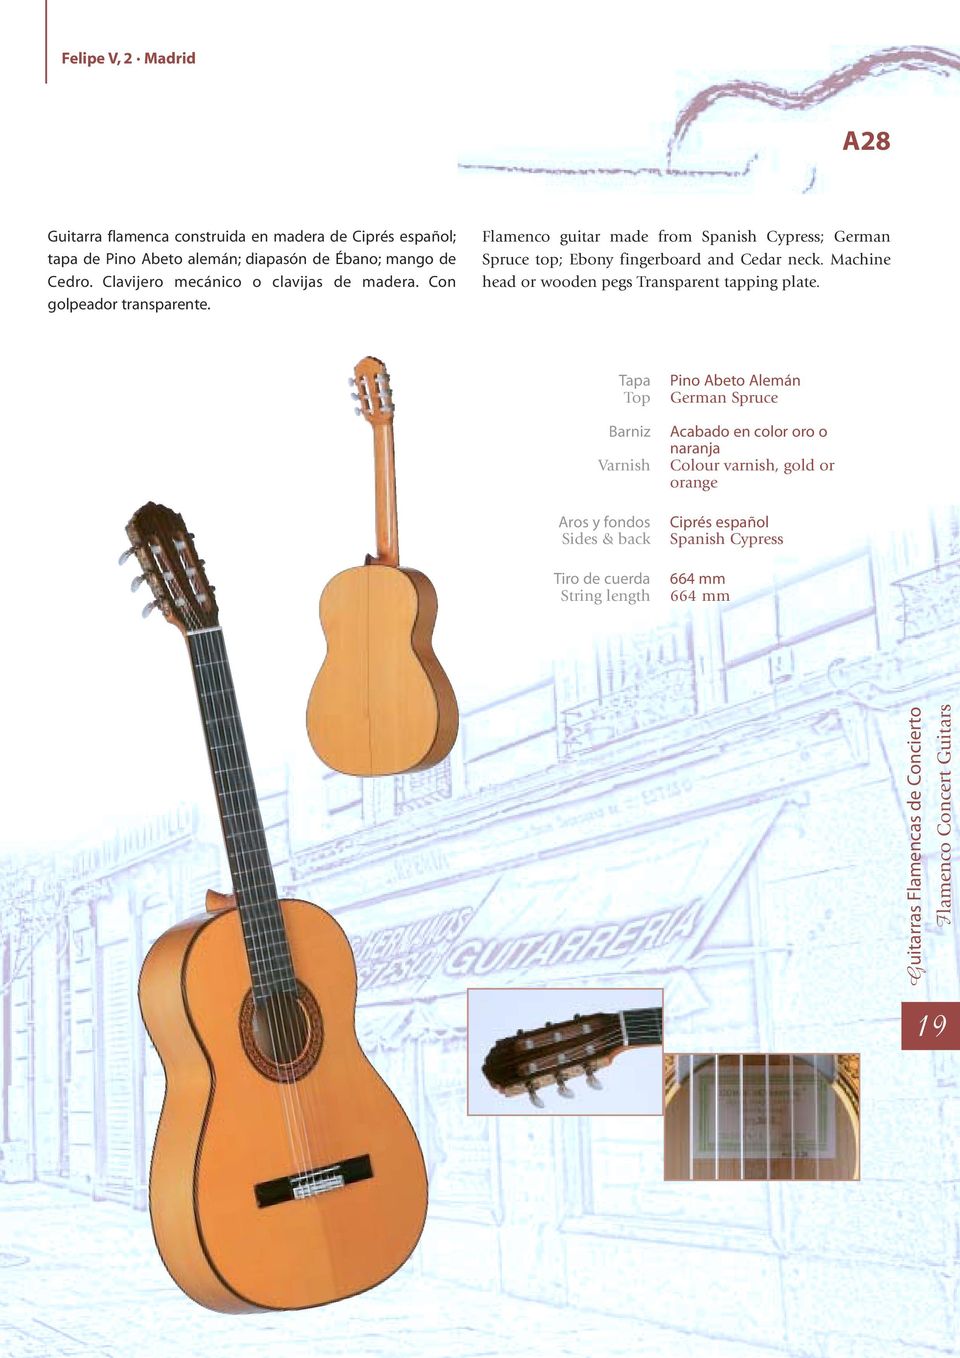 Flamenco guitar made from Spanish Cypress; German Spruce top; Ebony fingerboard and Cedar neck.